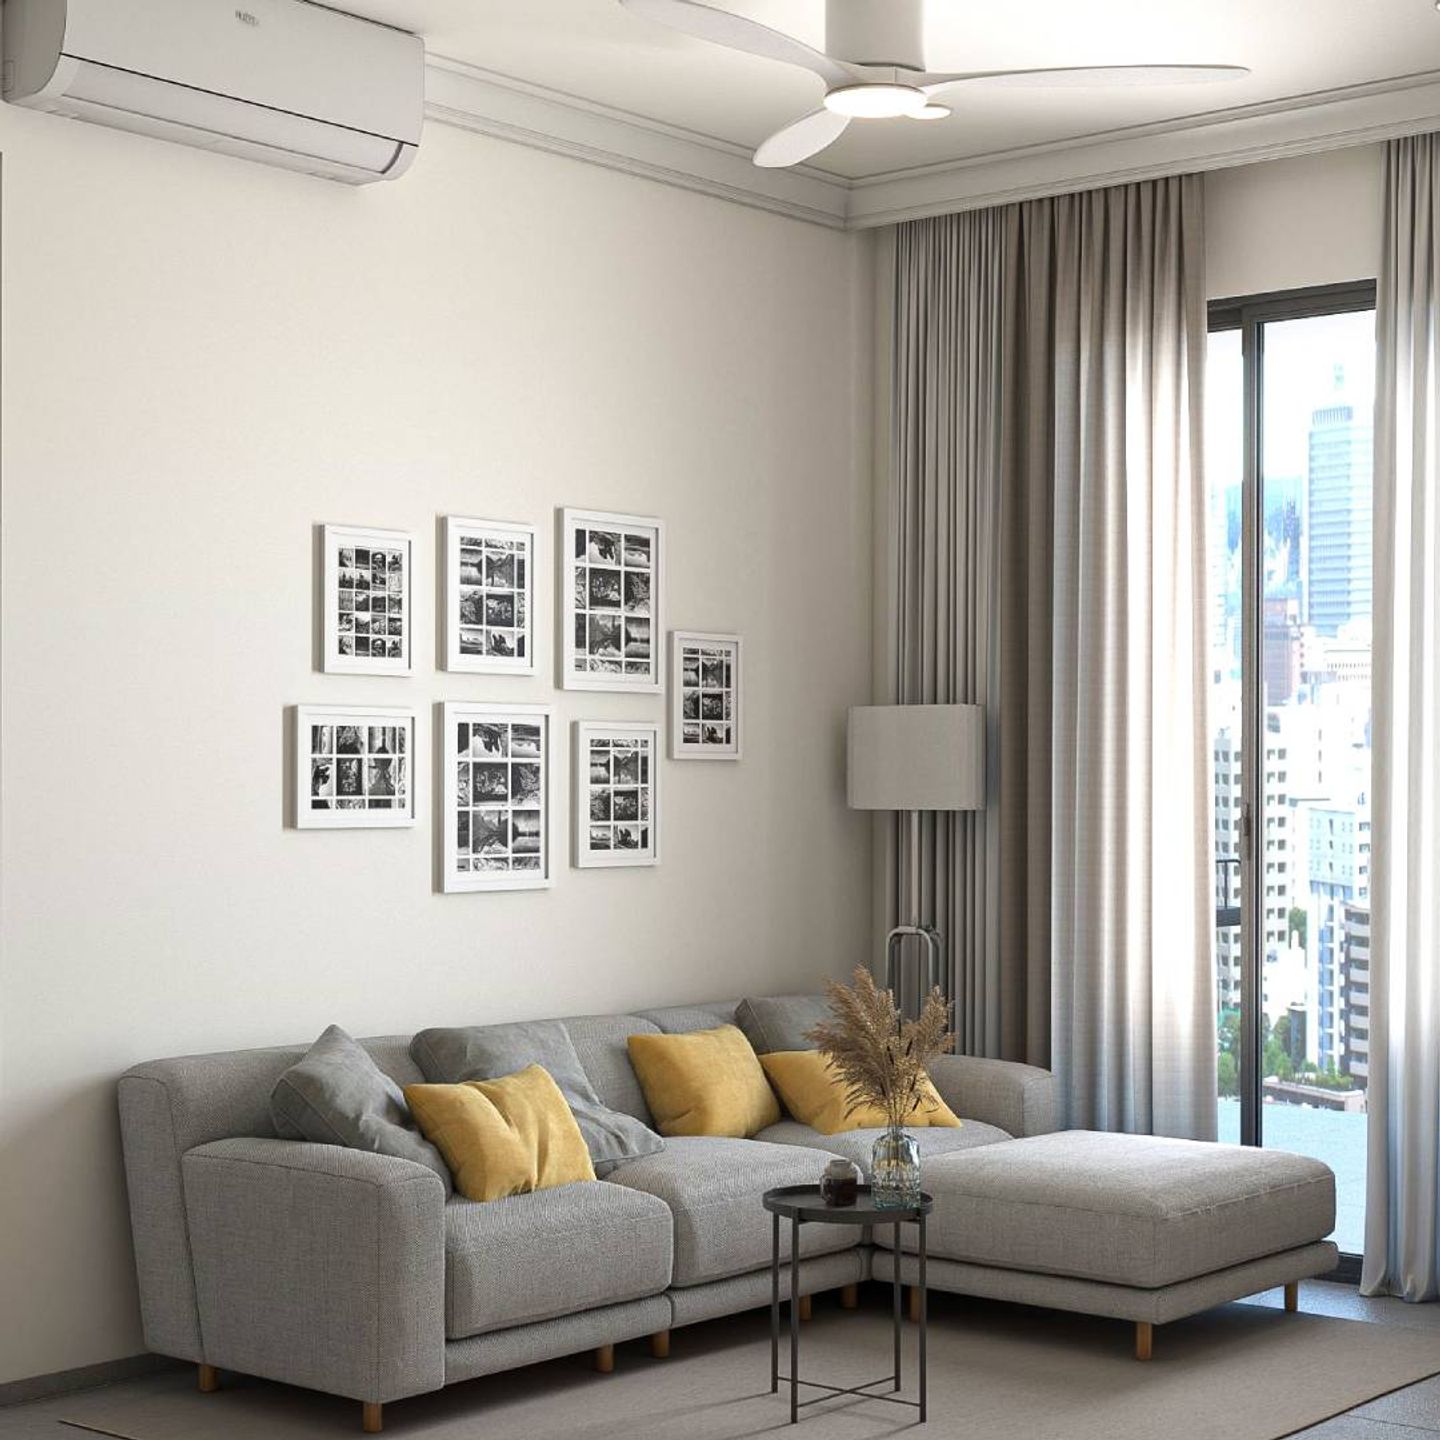 Living Room With A Grey Sofa - Livspace